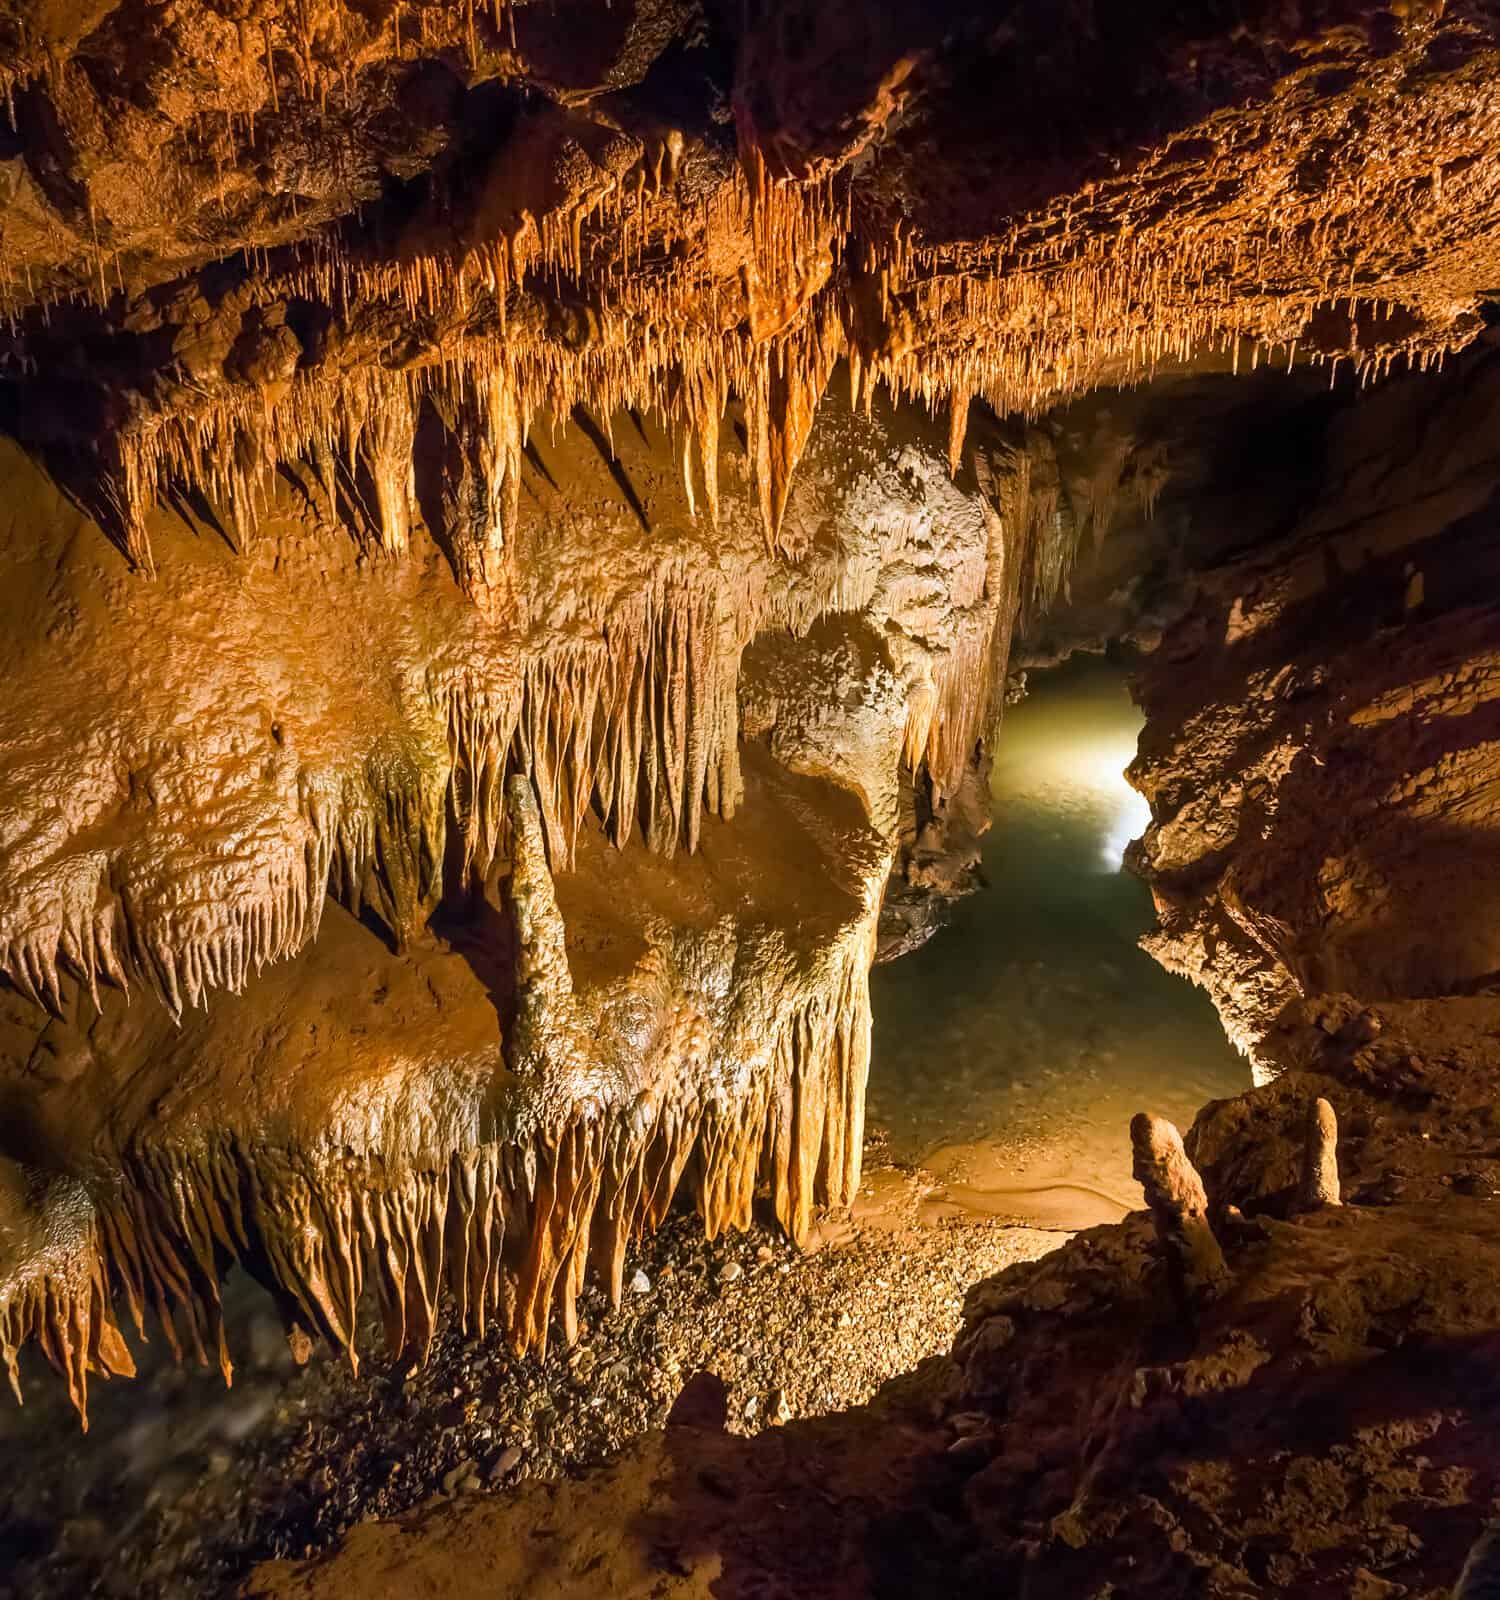 A stream flows beneath delicate rock formations in a subterranean cavern.